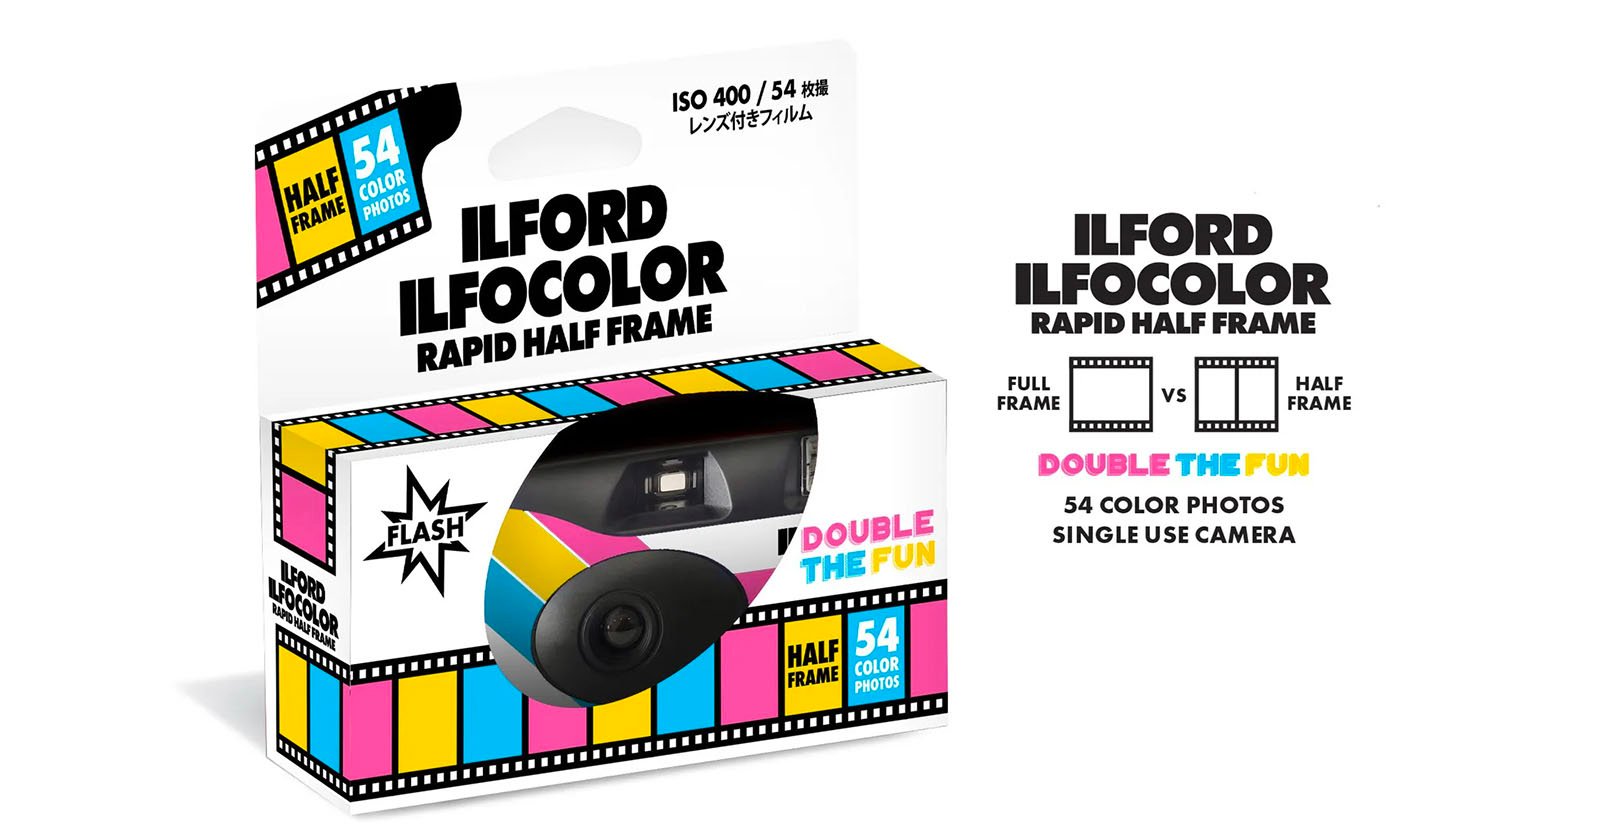 Ilfords New Disposable Camera is the Ilfocolor Rapid Half Frame